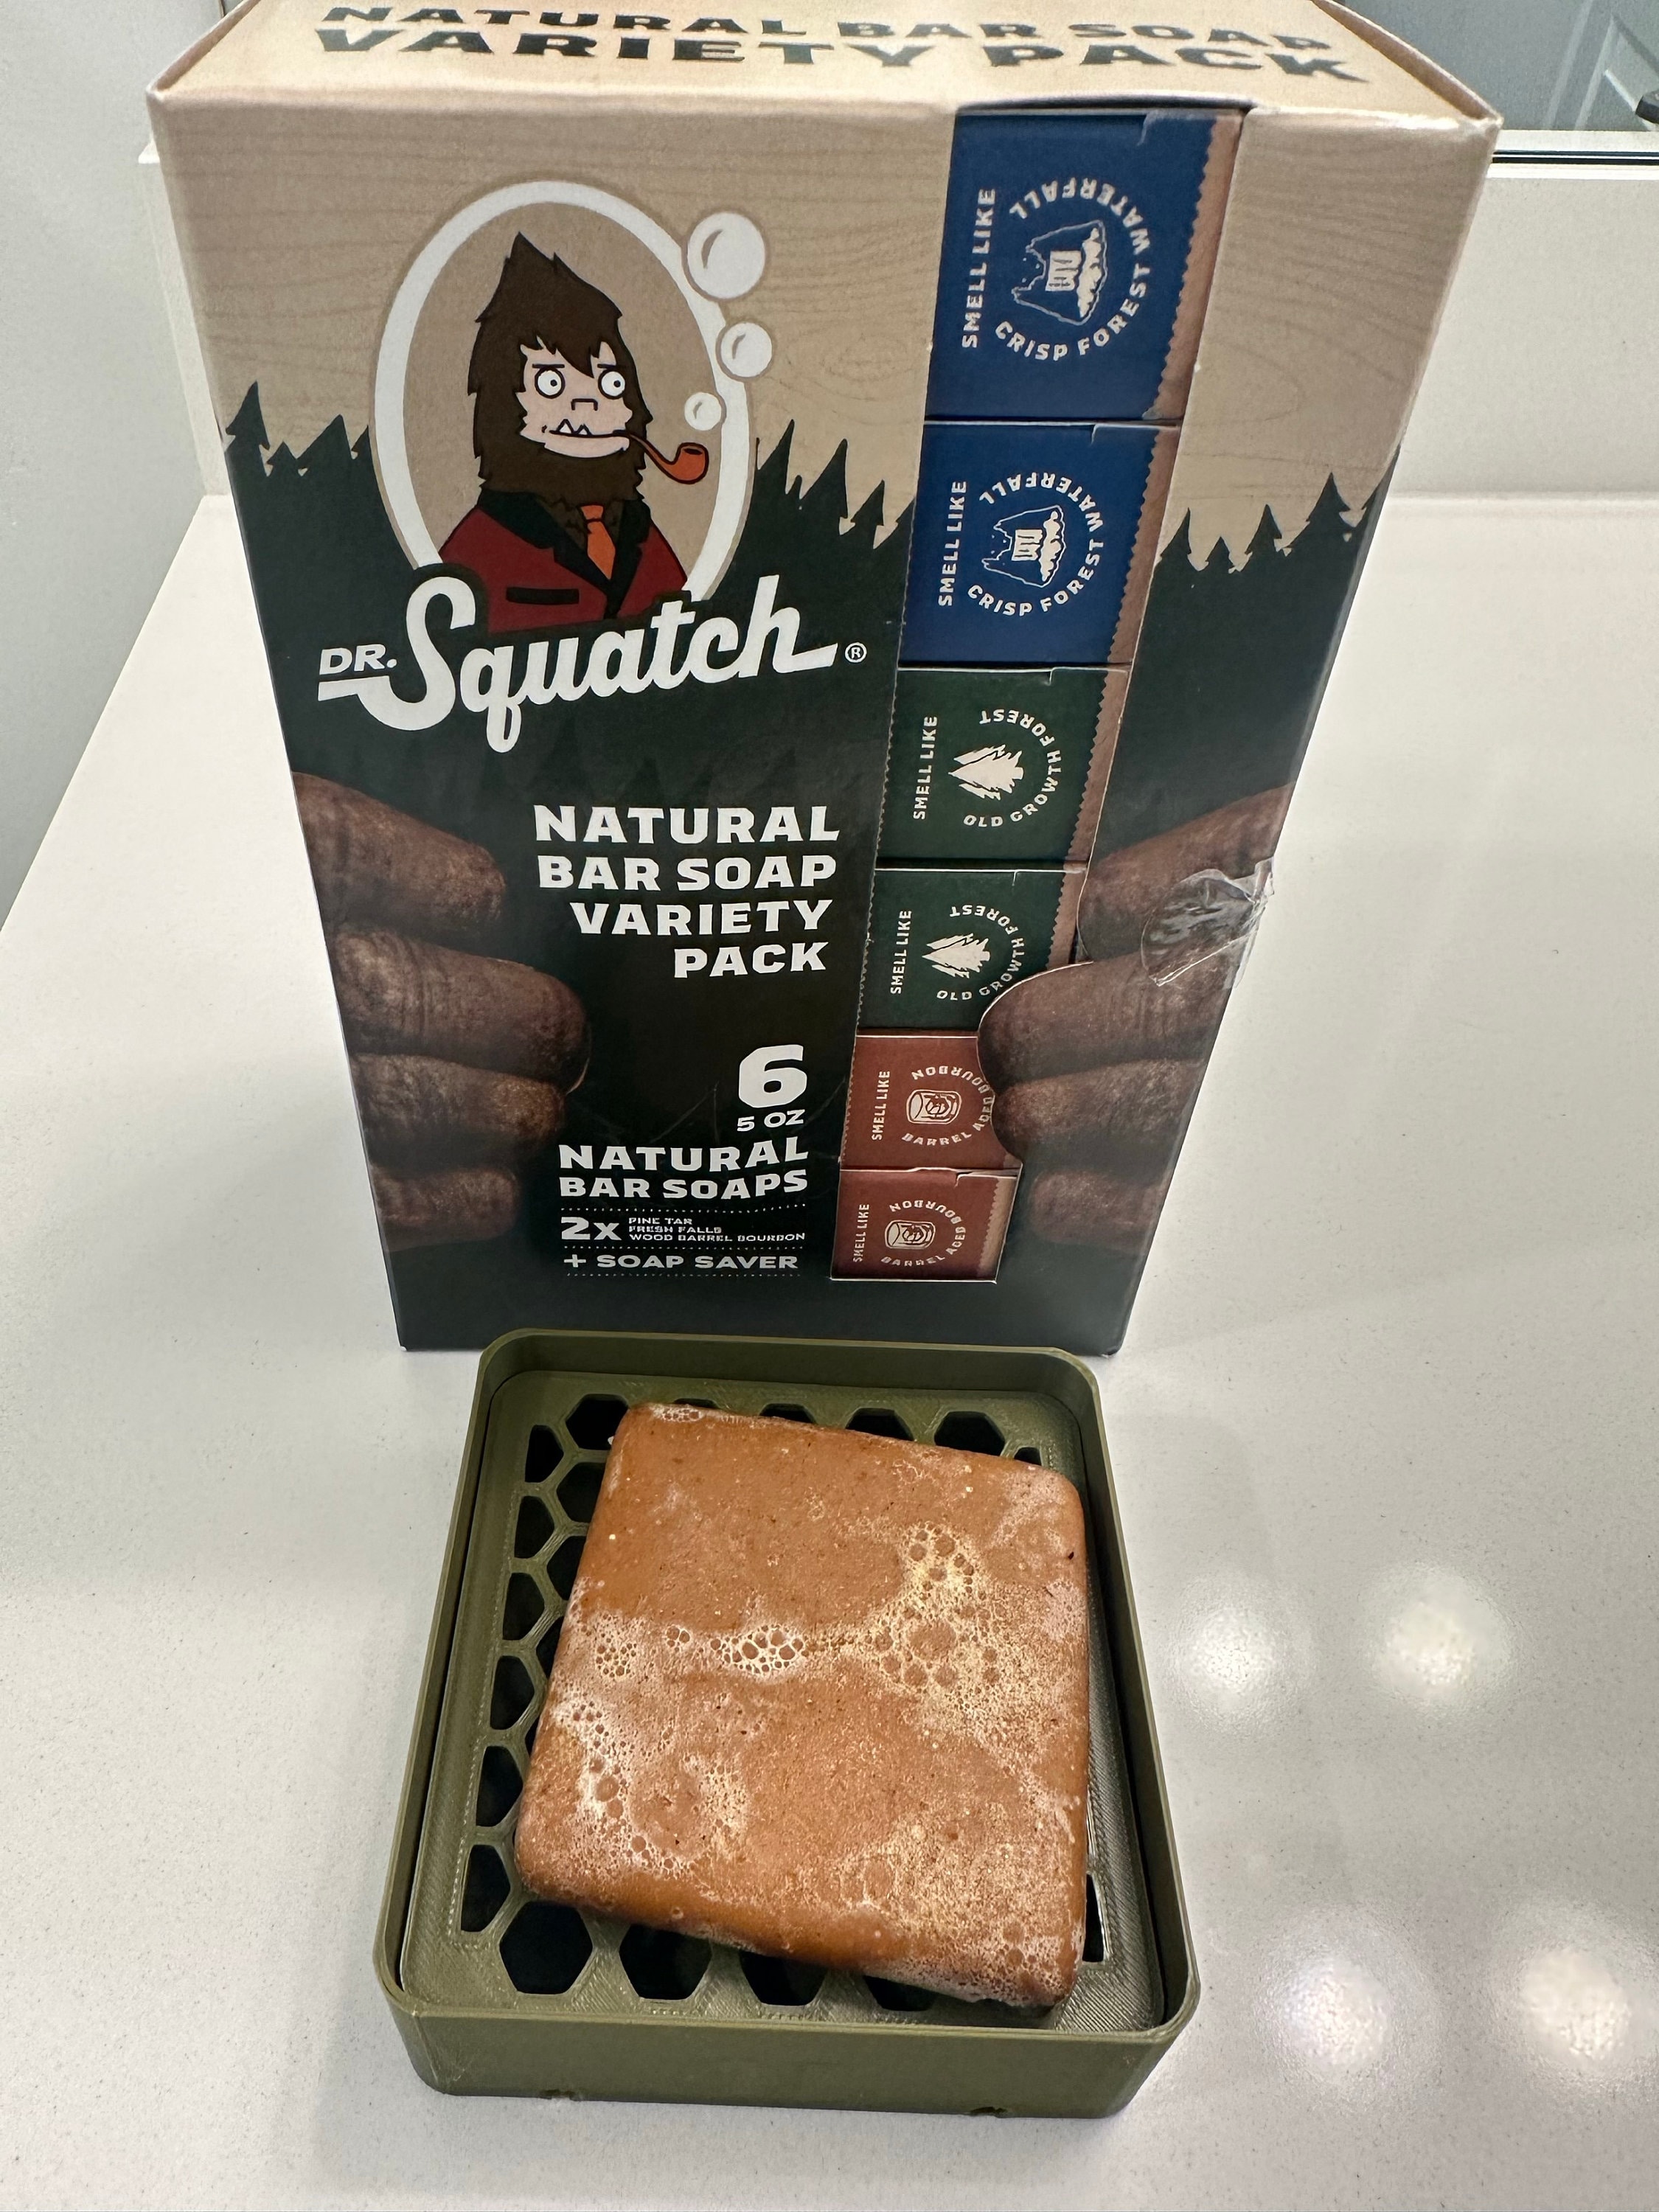 Dr. Squatch Natural Bar Soap Variety Pack, 6 pk./5.0 oz.